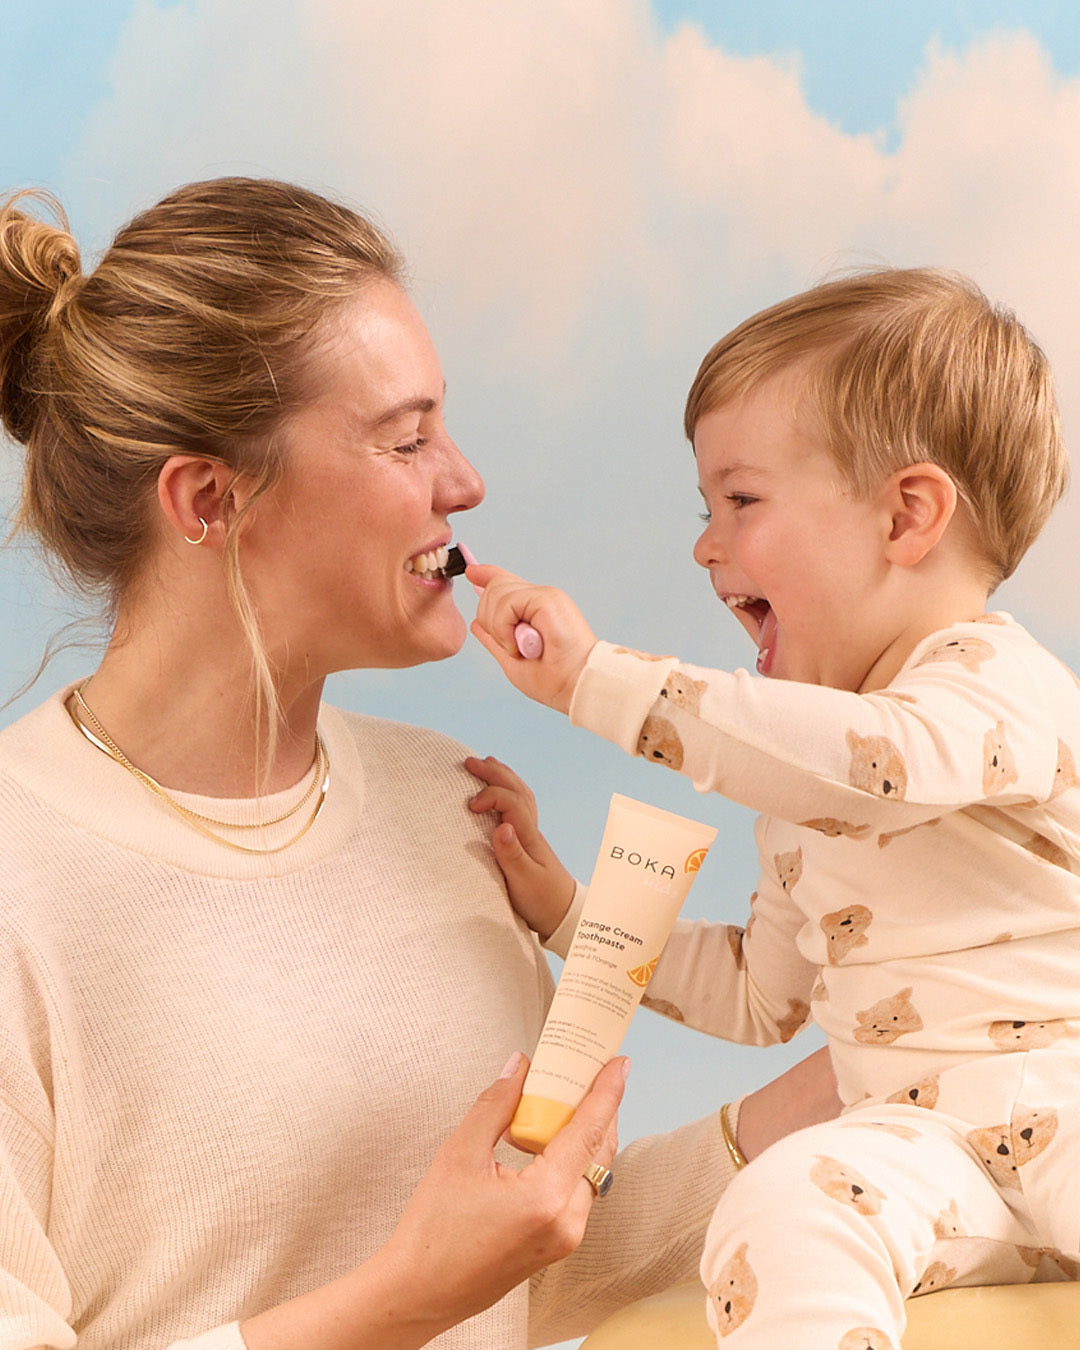 Baby brushing woman's teeth